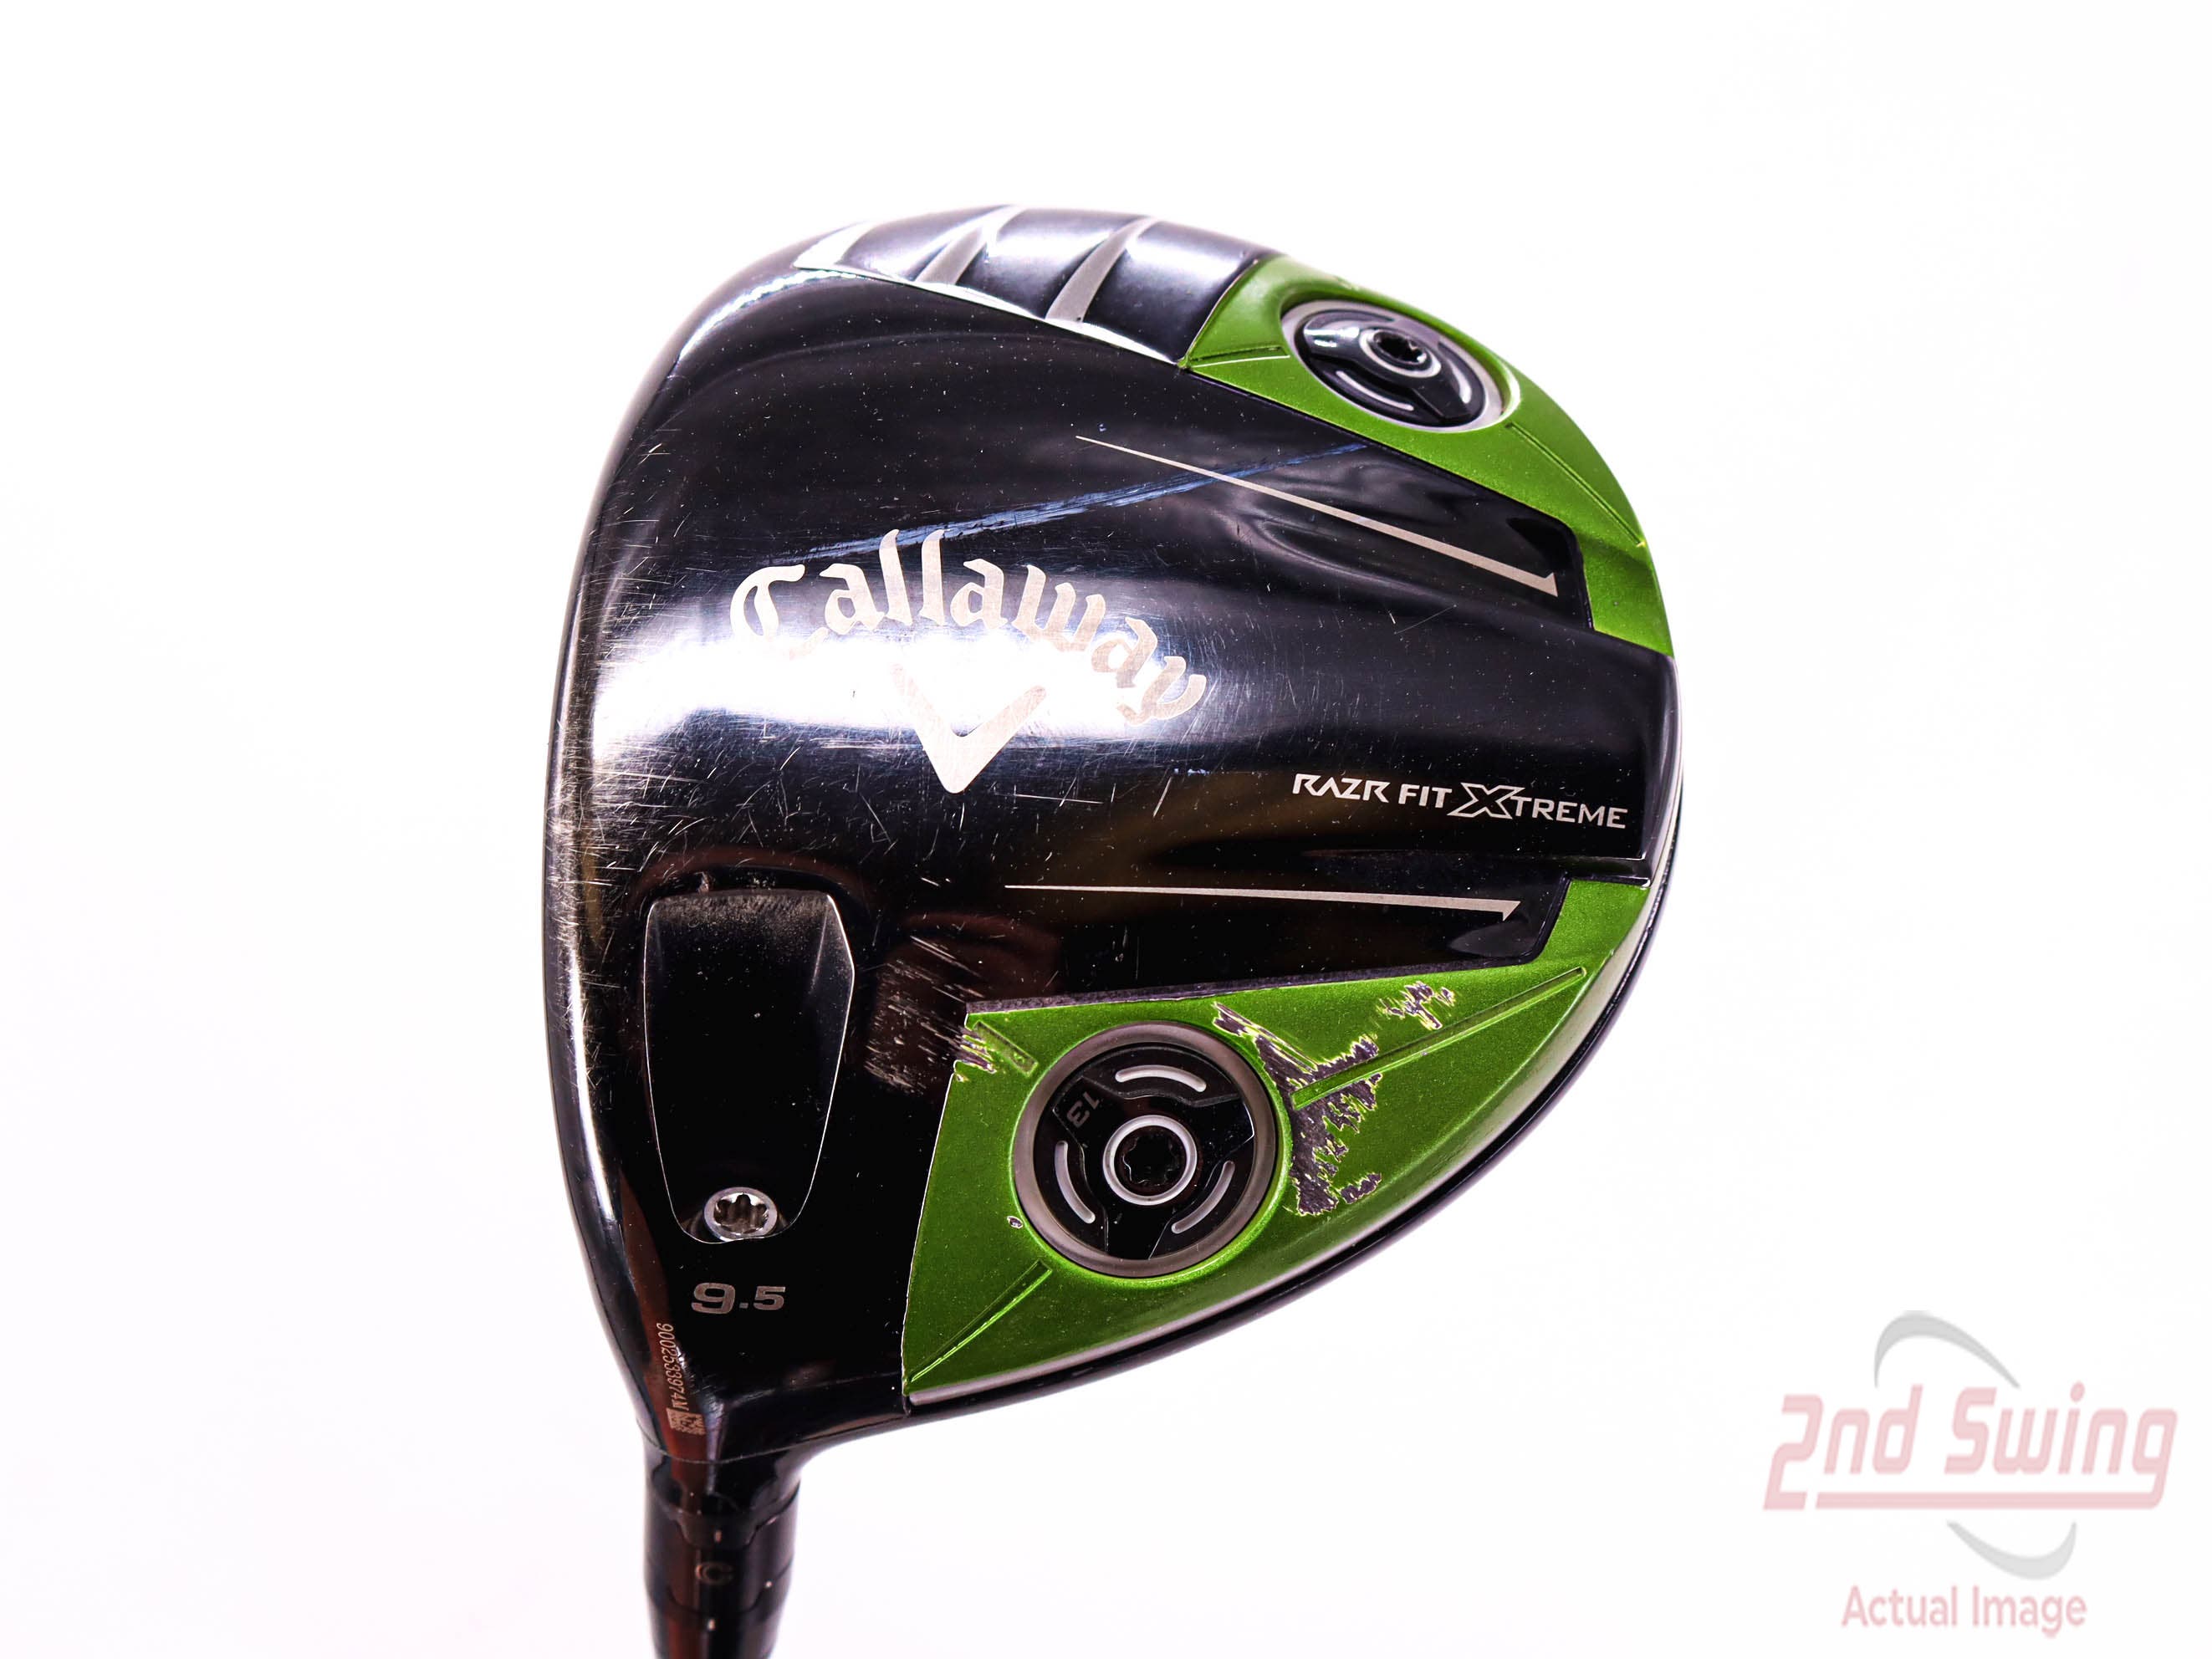 Callaway Razr Fit Xtreme Driver (D-42330208425) 2nd Swing Golf